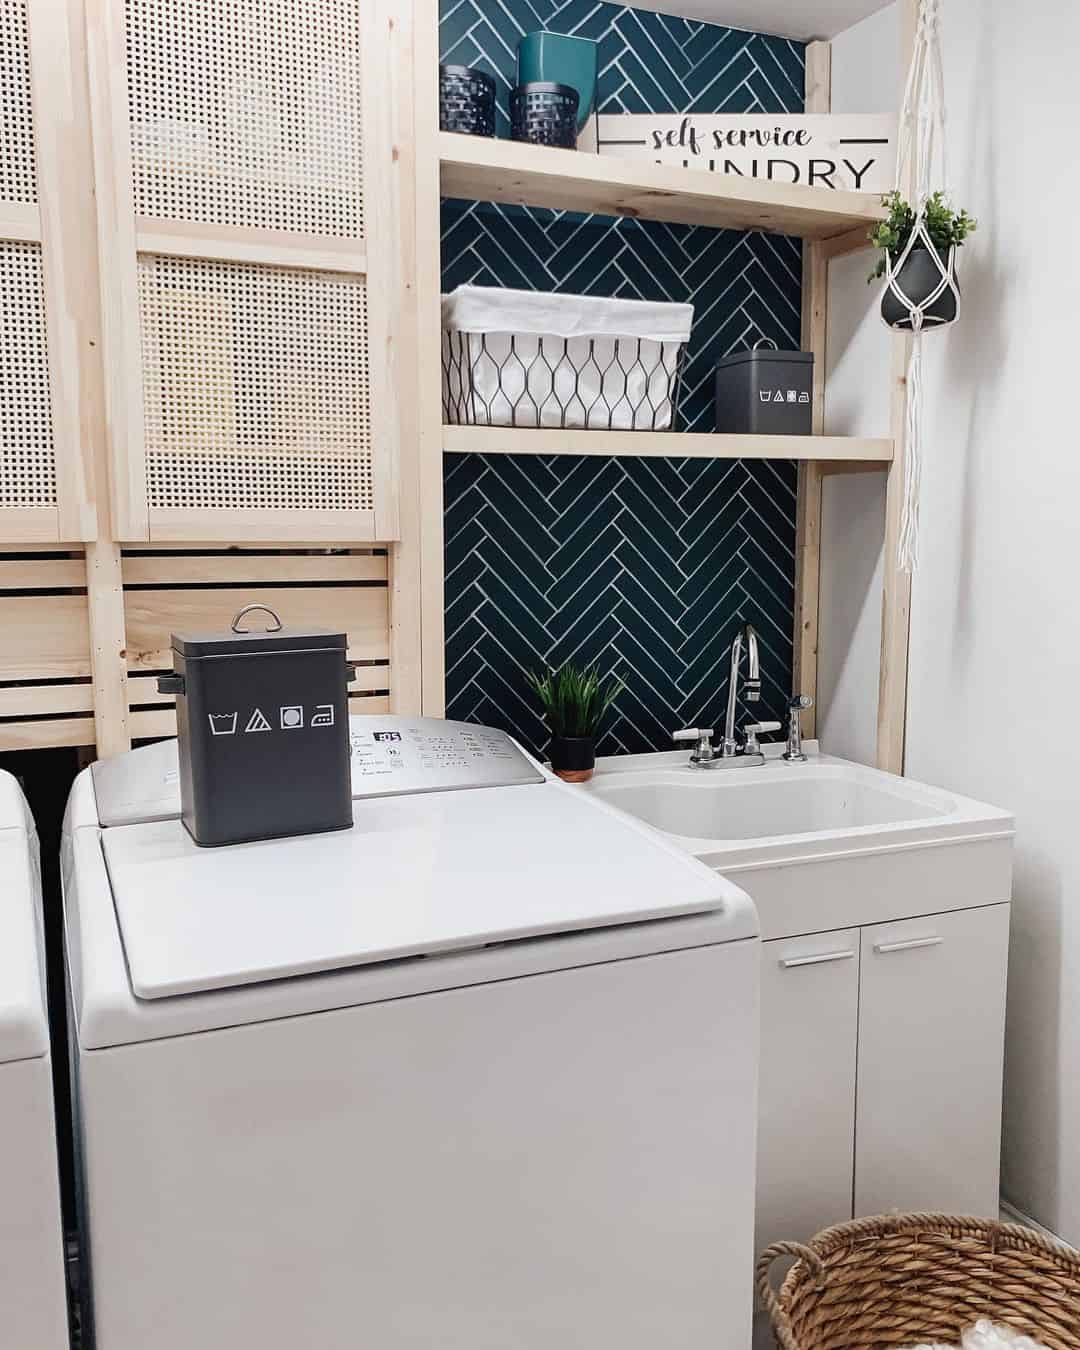 Wood Cabinets and Herringbone Tile Laundry Room - Soul & Lane